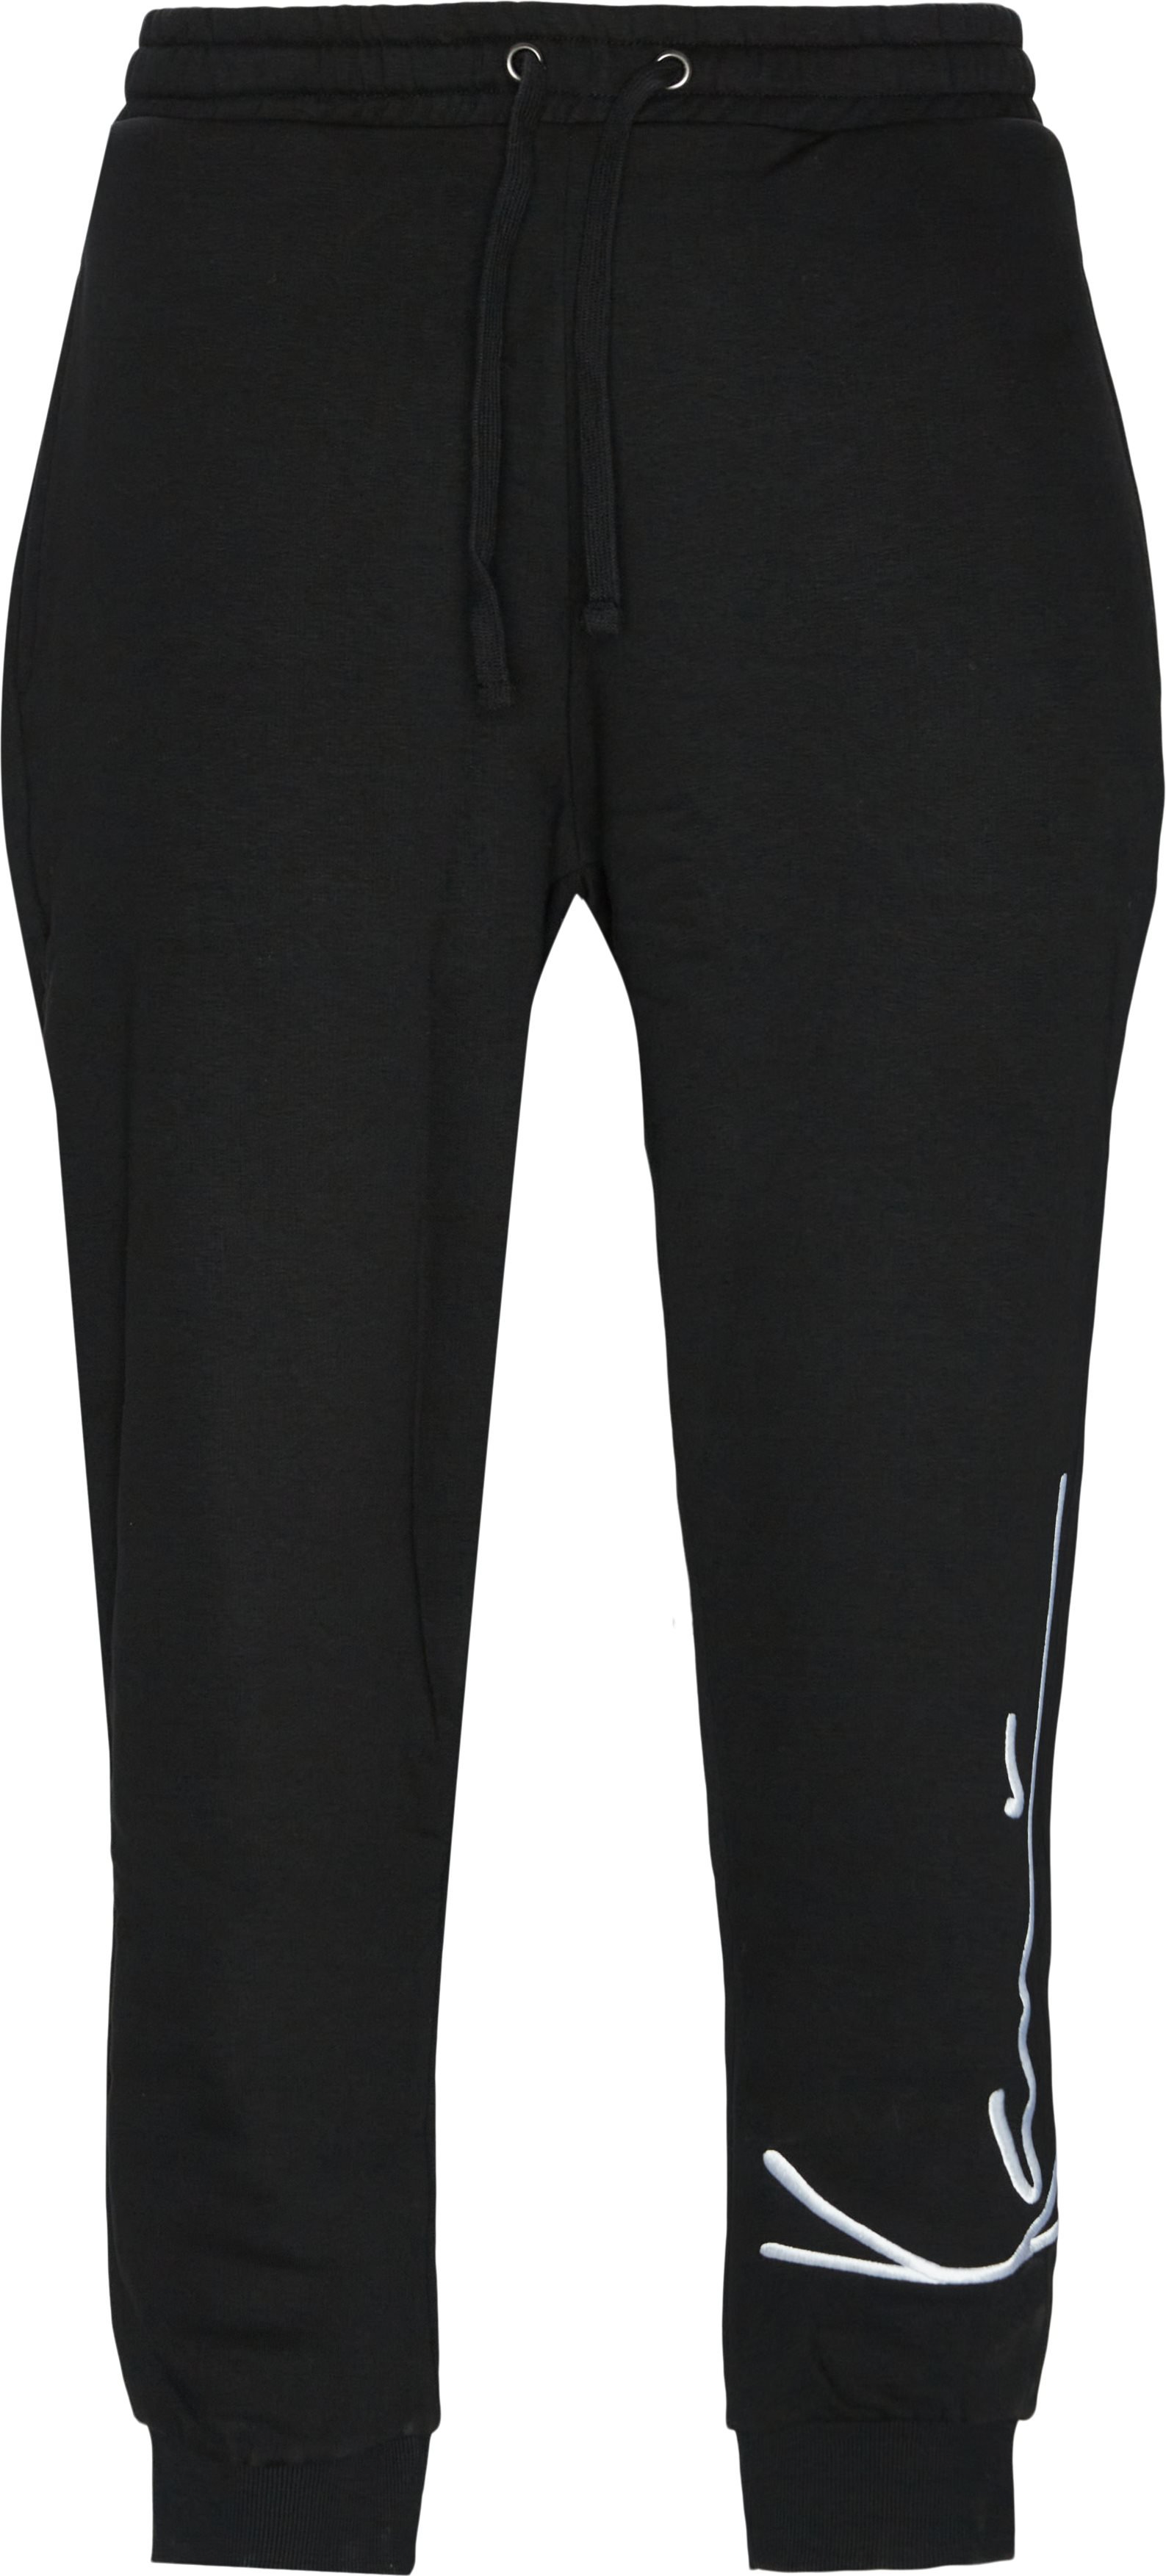 6004737 Sweatpants - Trousers - Regular fit - Black